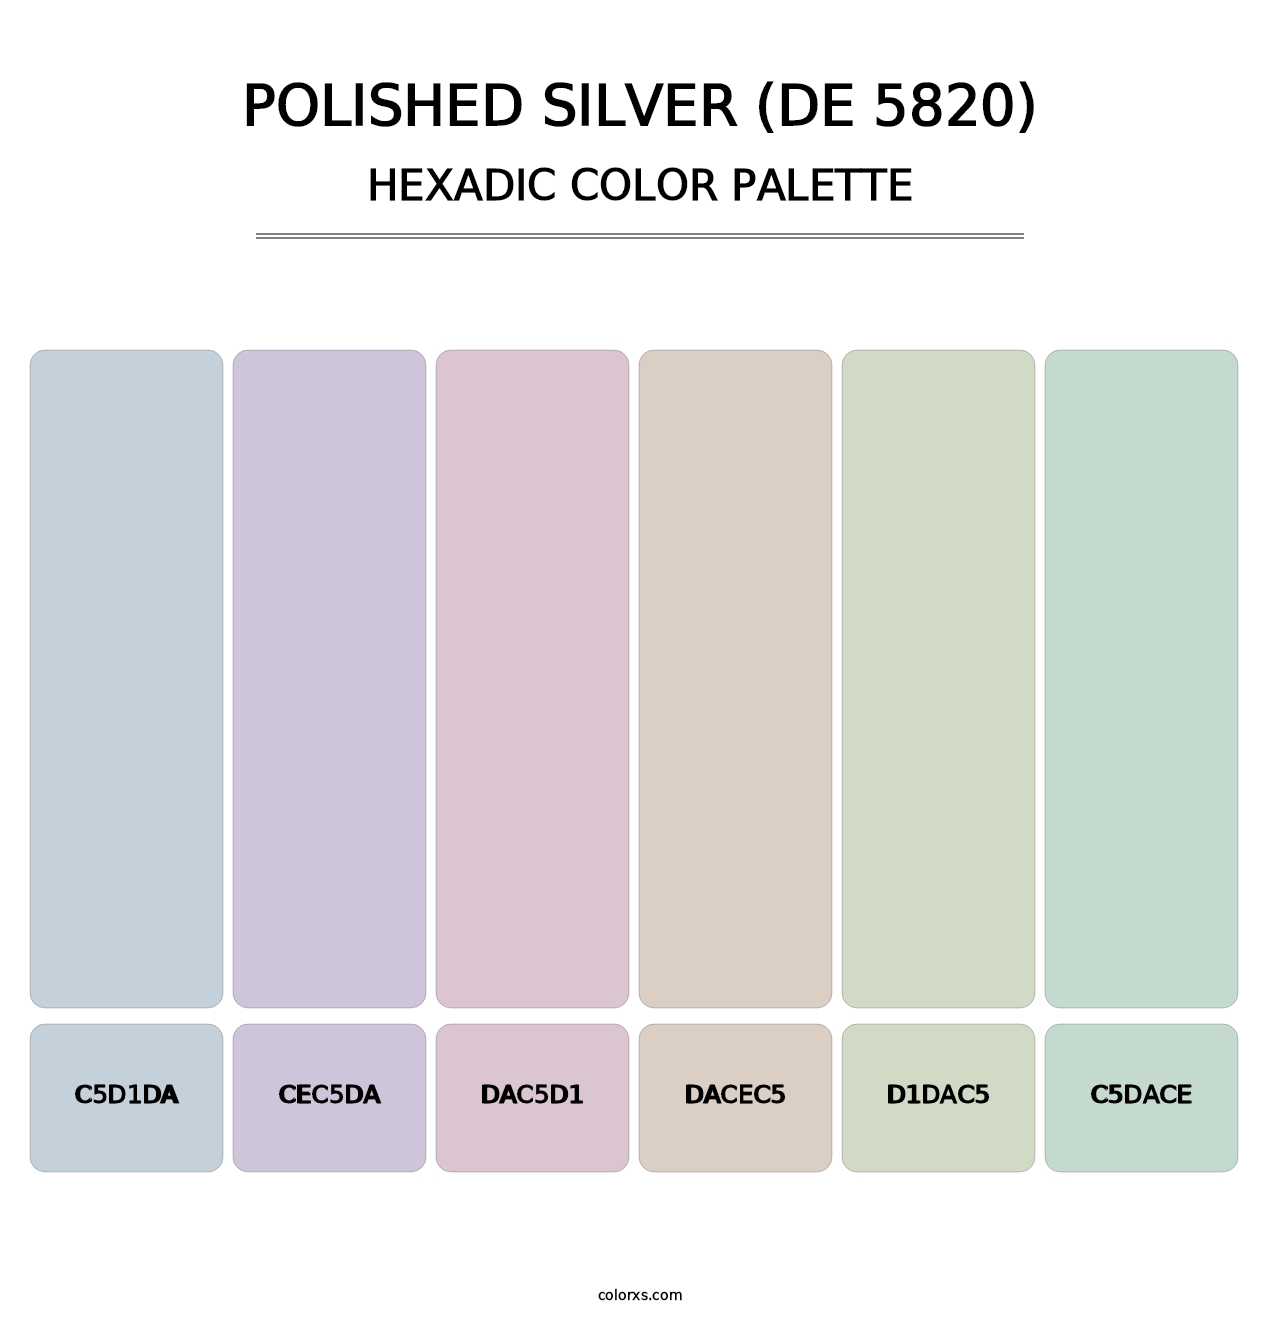 Polished Silver (DE 5820) - Hexadic Color Palette